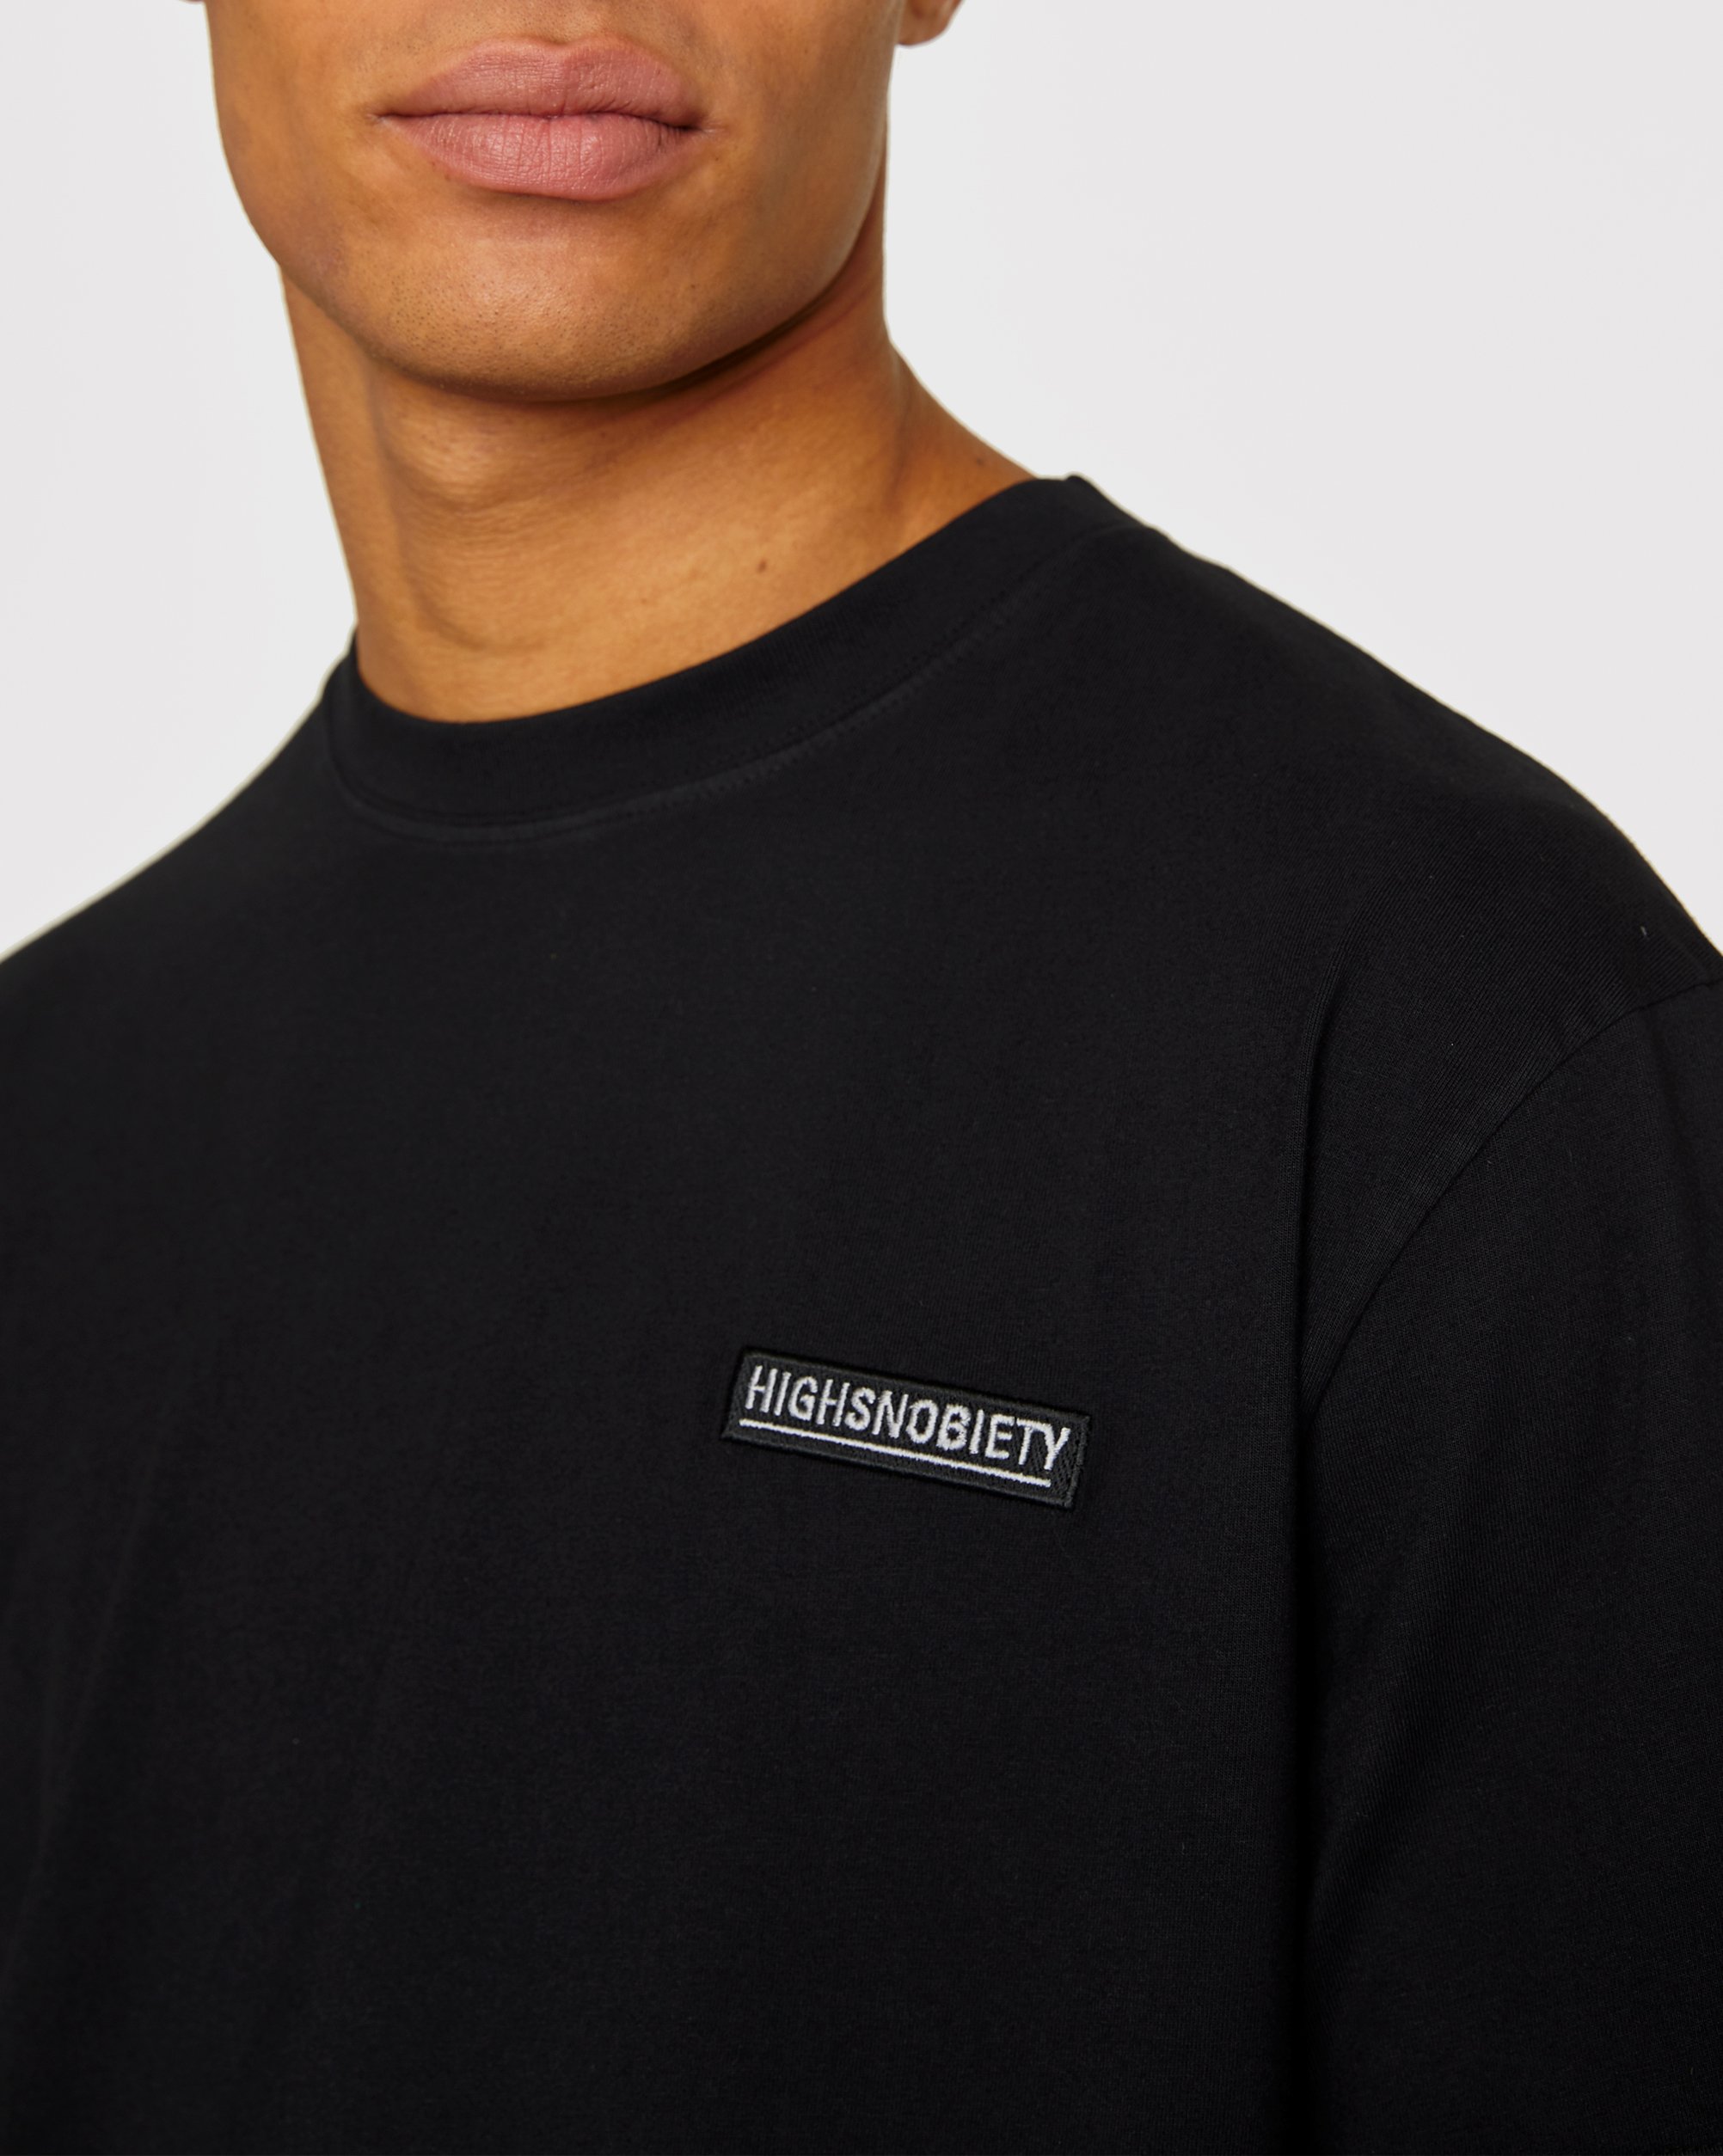 Highsnobiety - Staples T-Shirt Black - Clothing - Black - Image 5